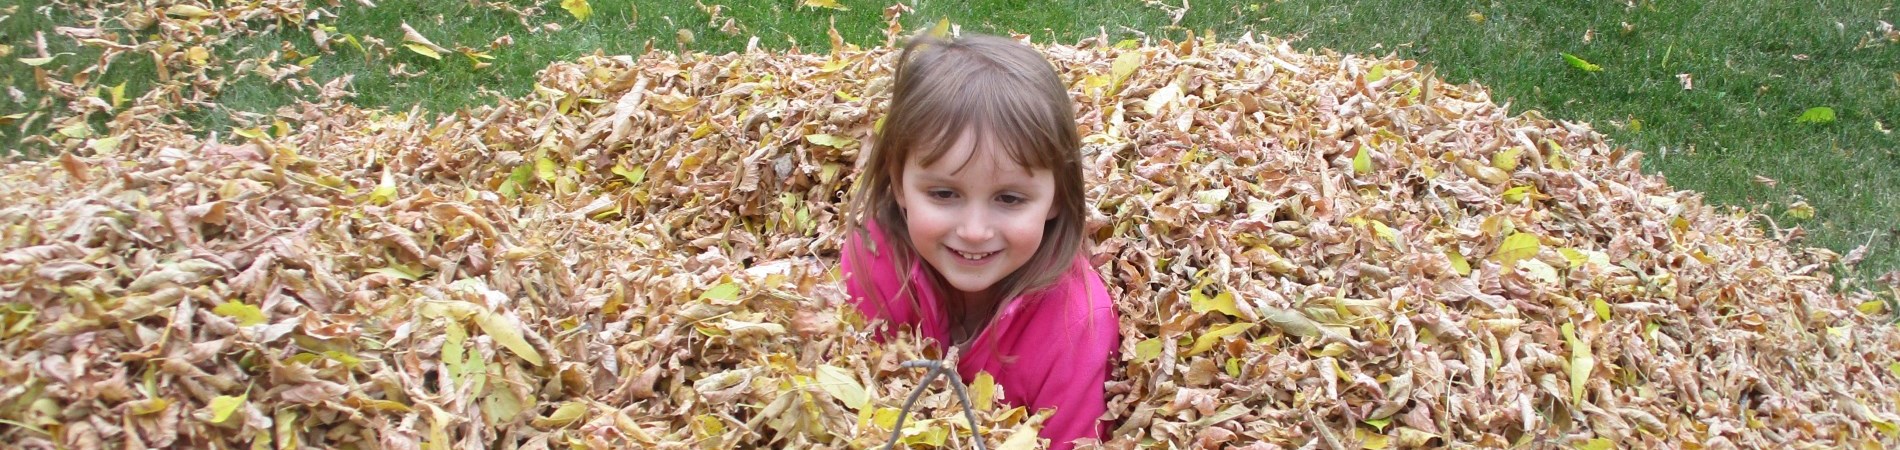 Little girl in pile of fall leaves